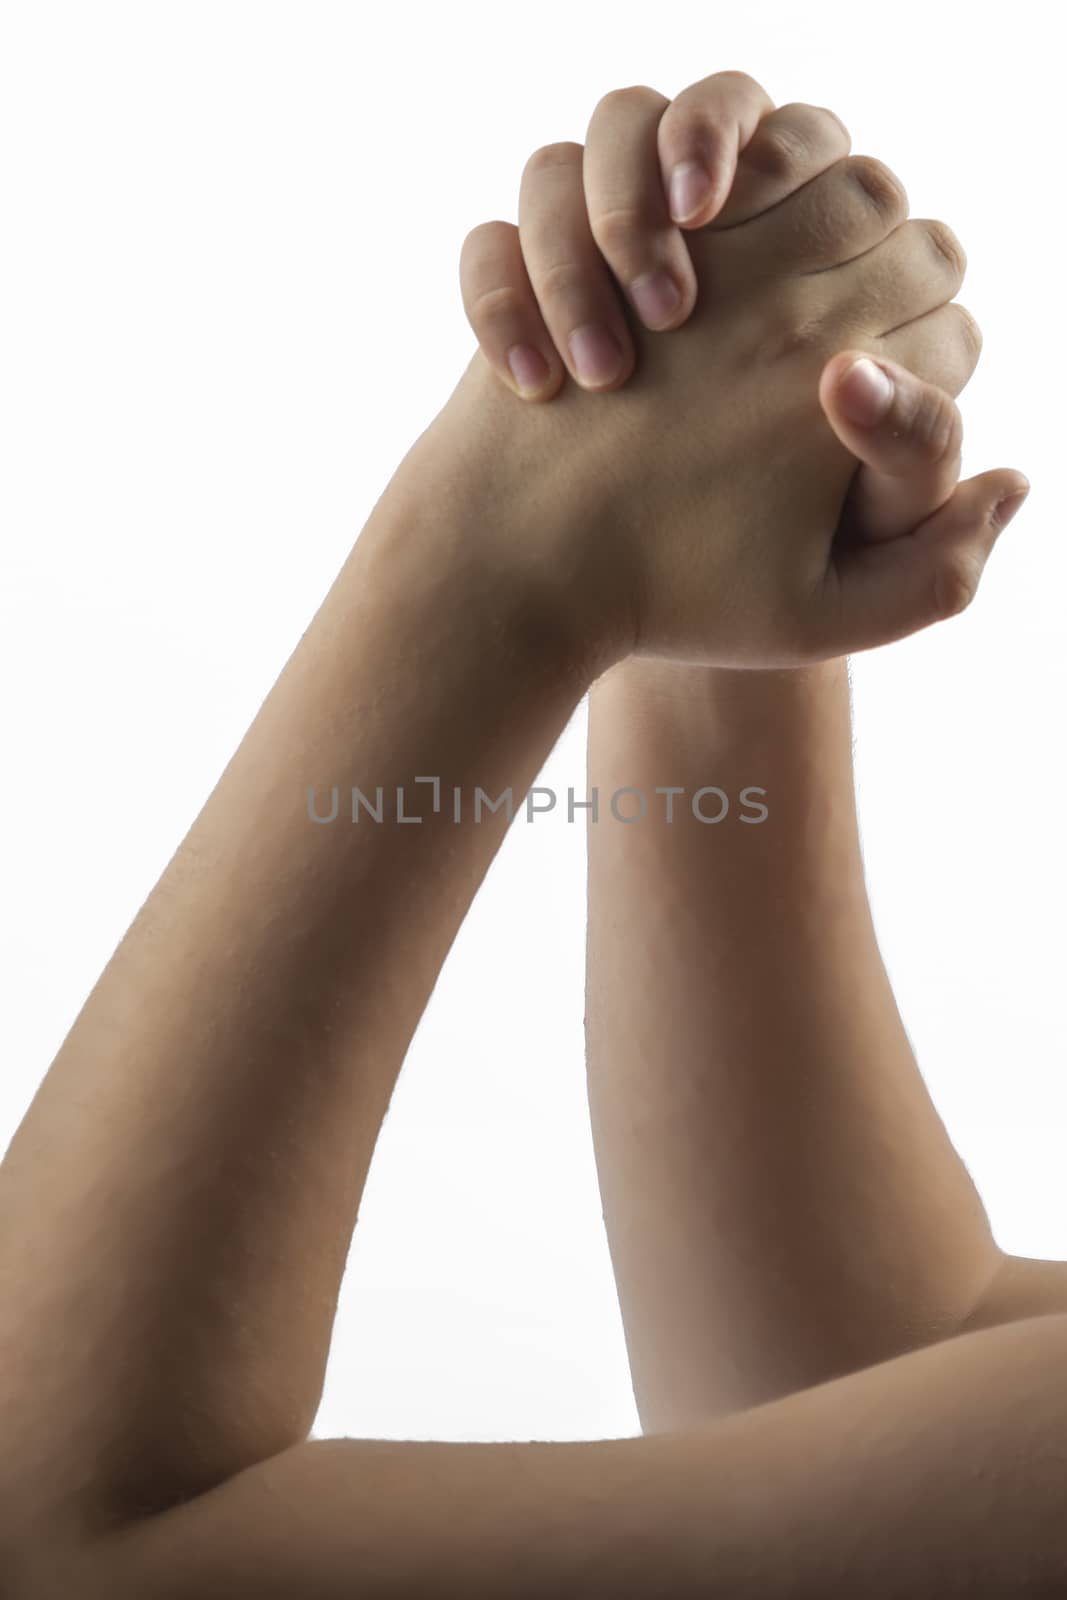 Young hands make a embracing hands  gesture